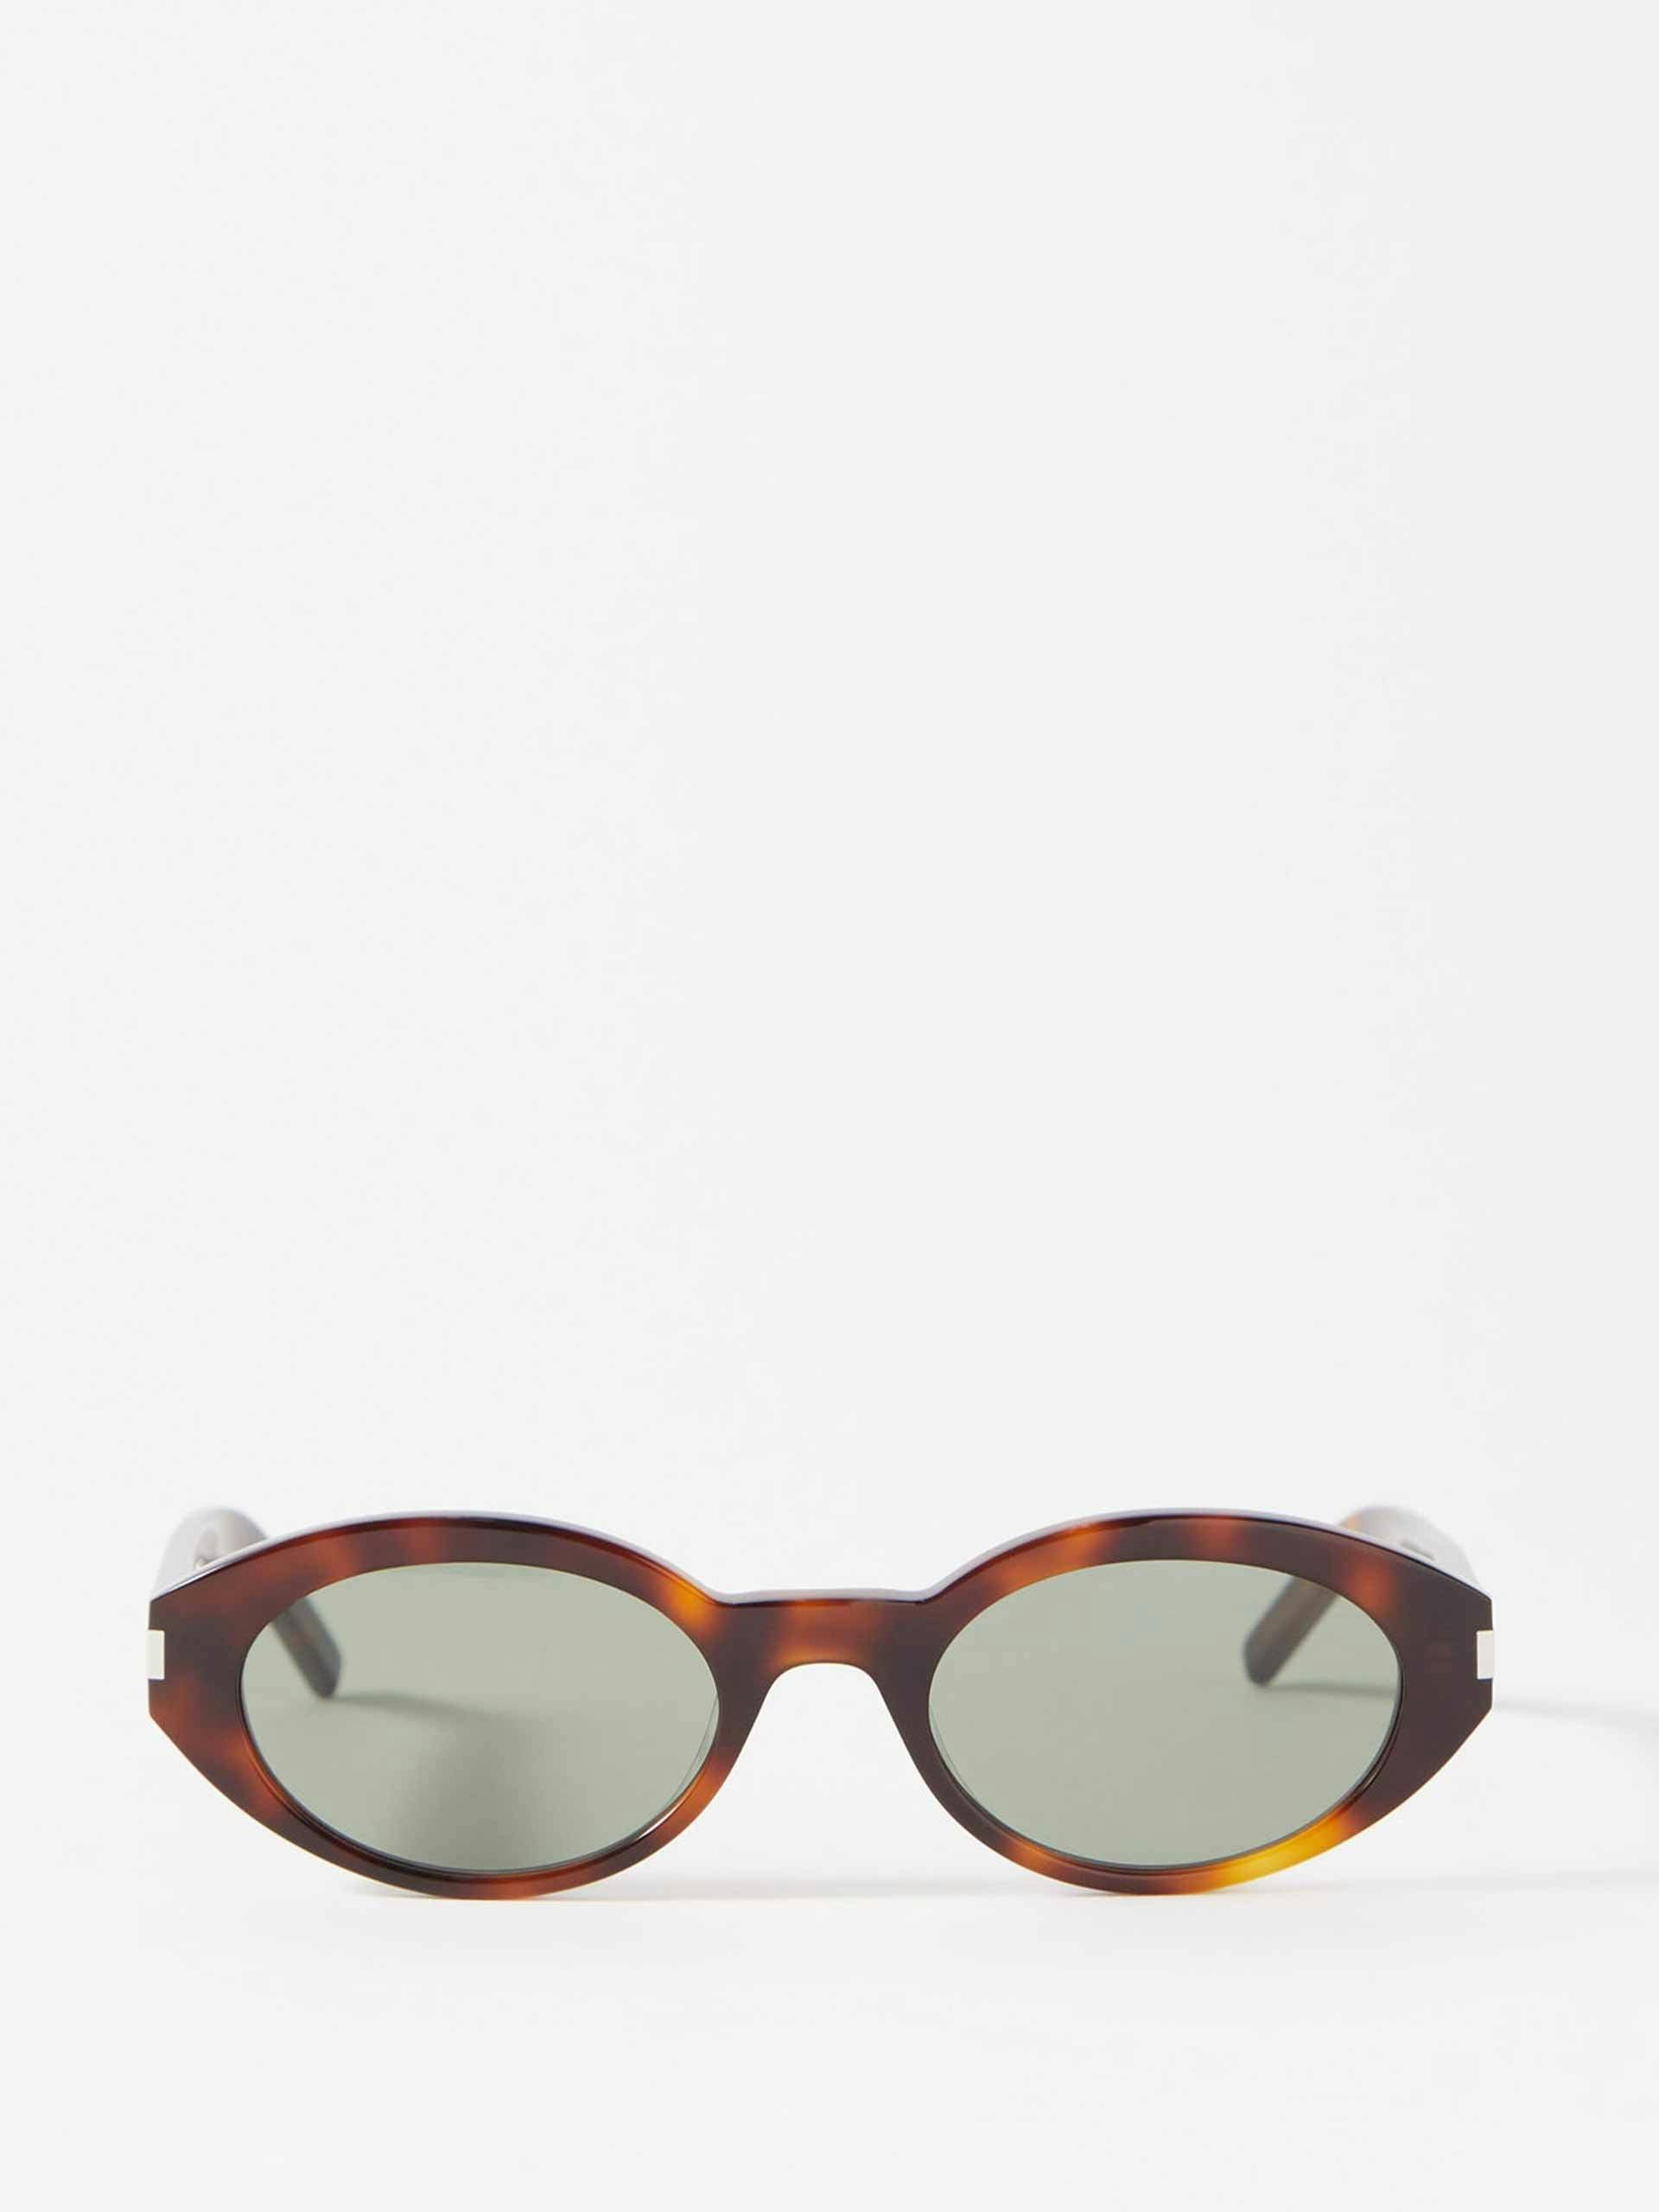 Brown oval acetate sunglasses